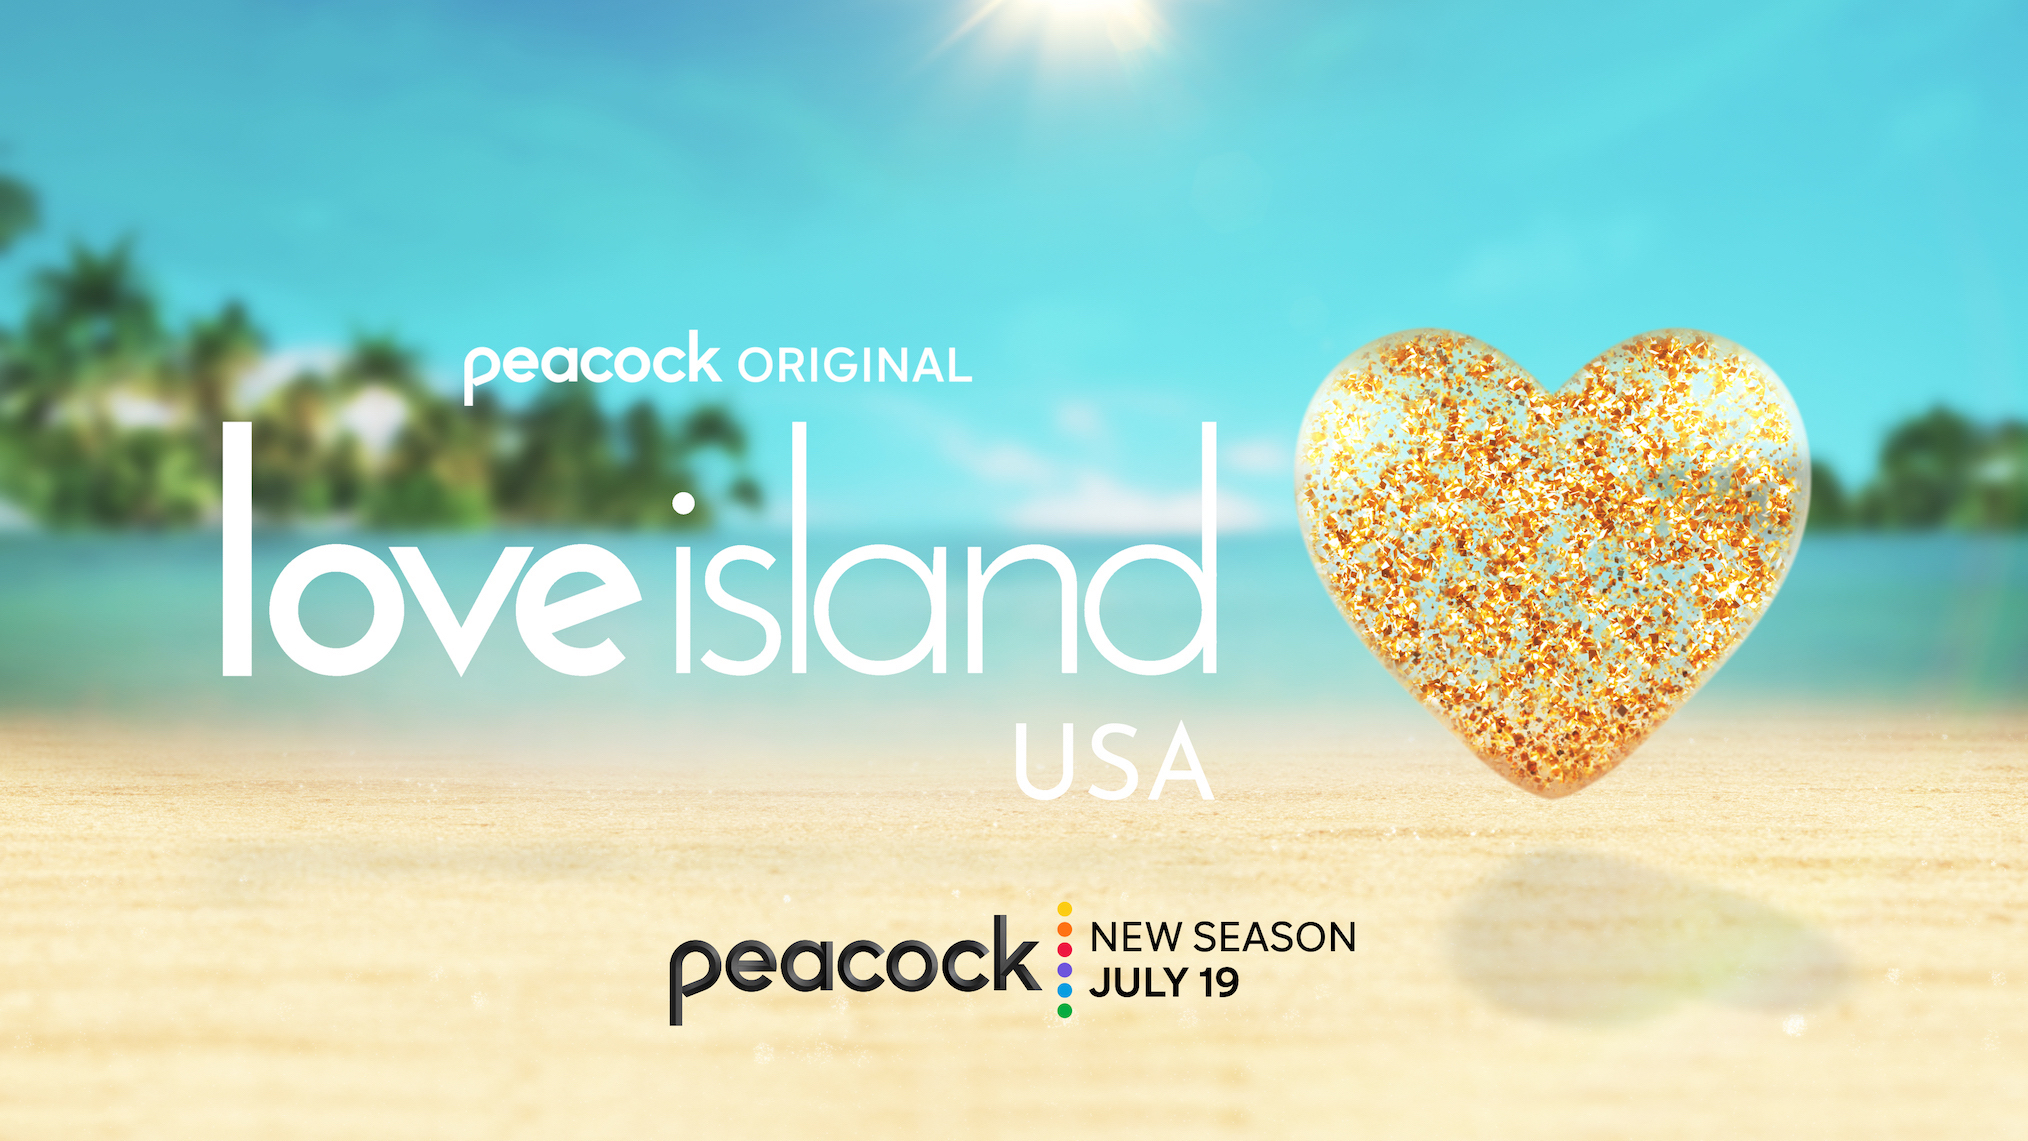 Peacock Love Island: USA logo